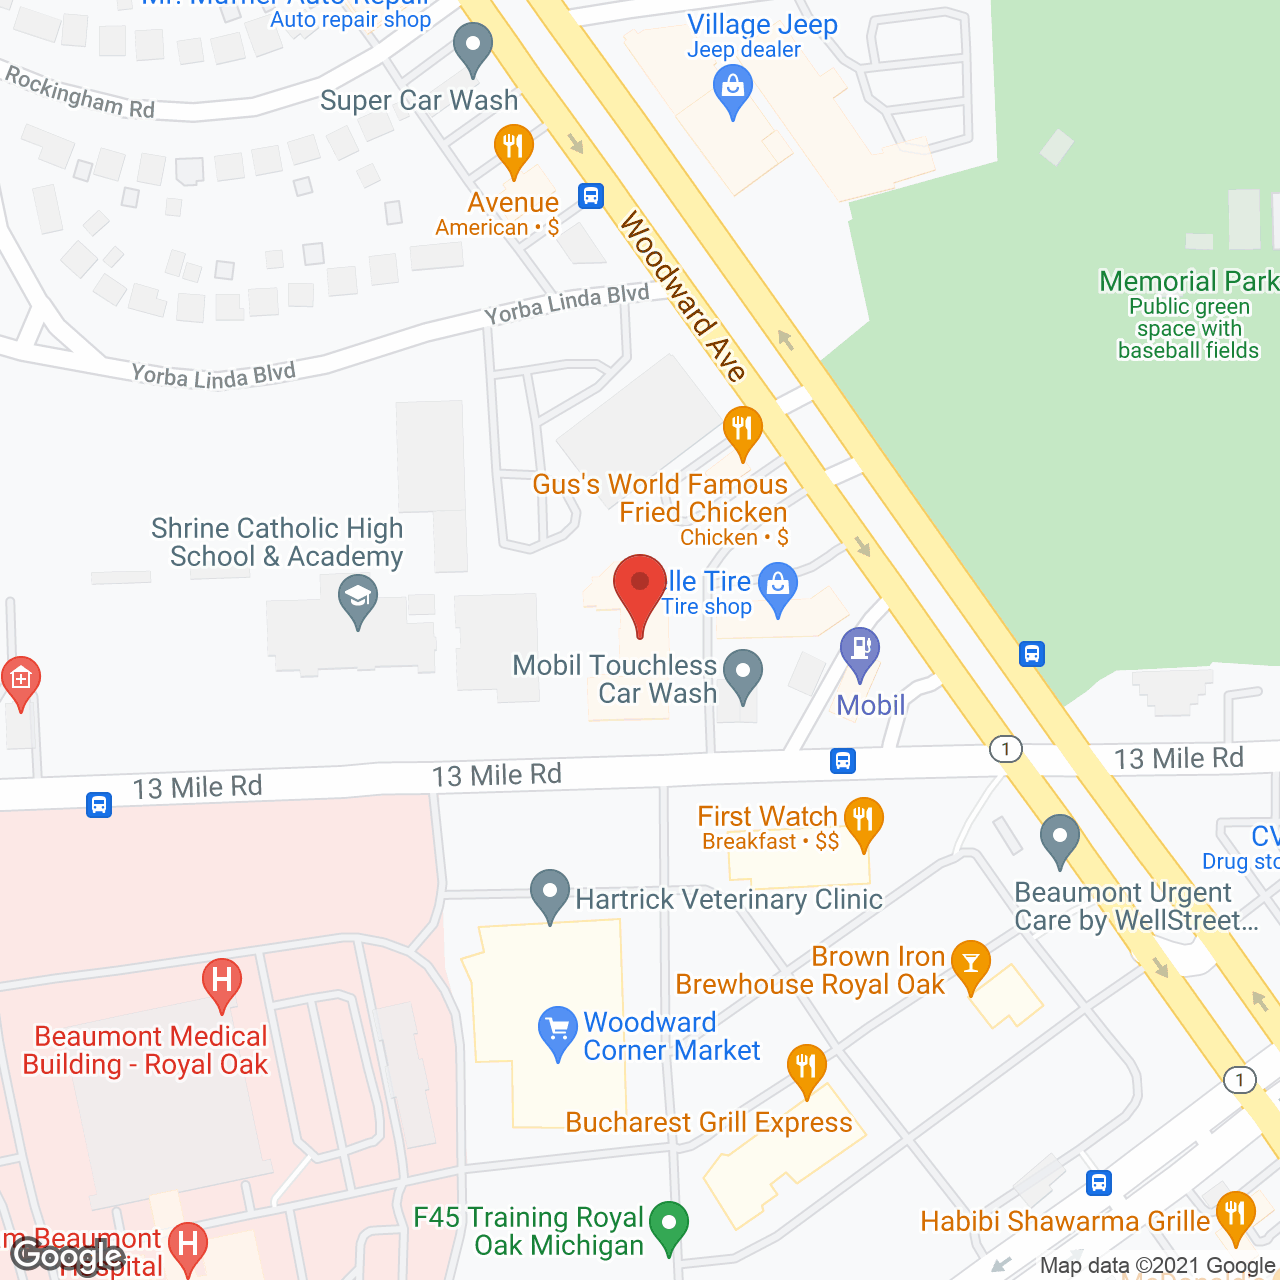 Waltonwood Royal Oak in google map